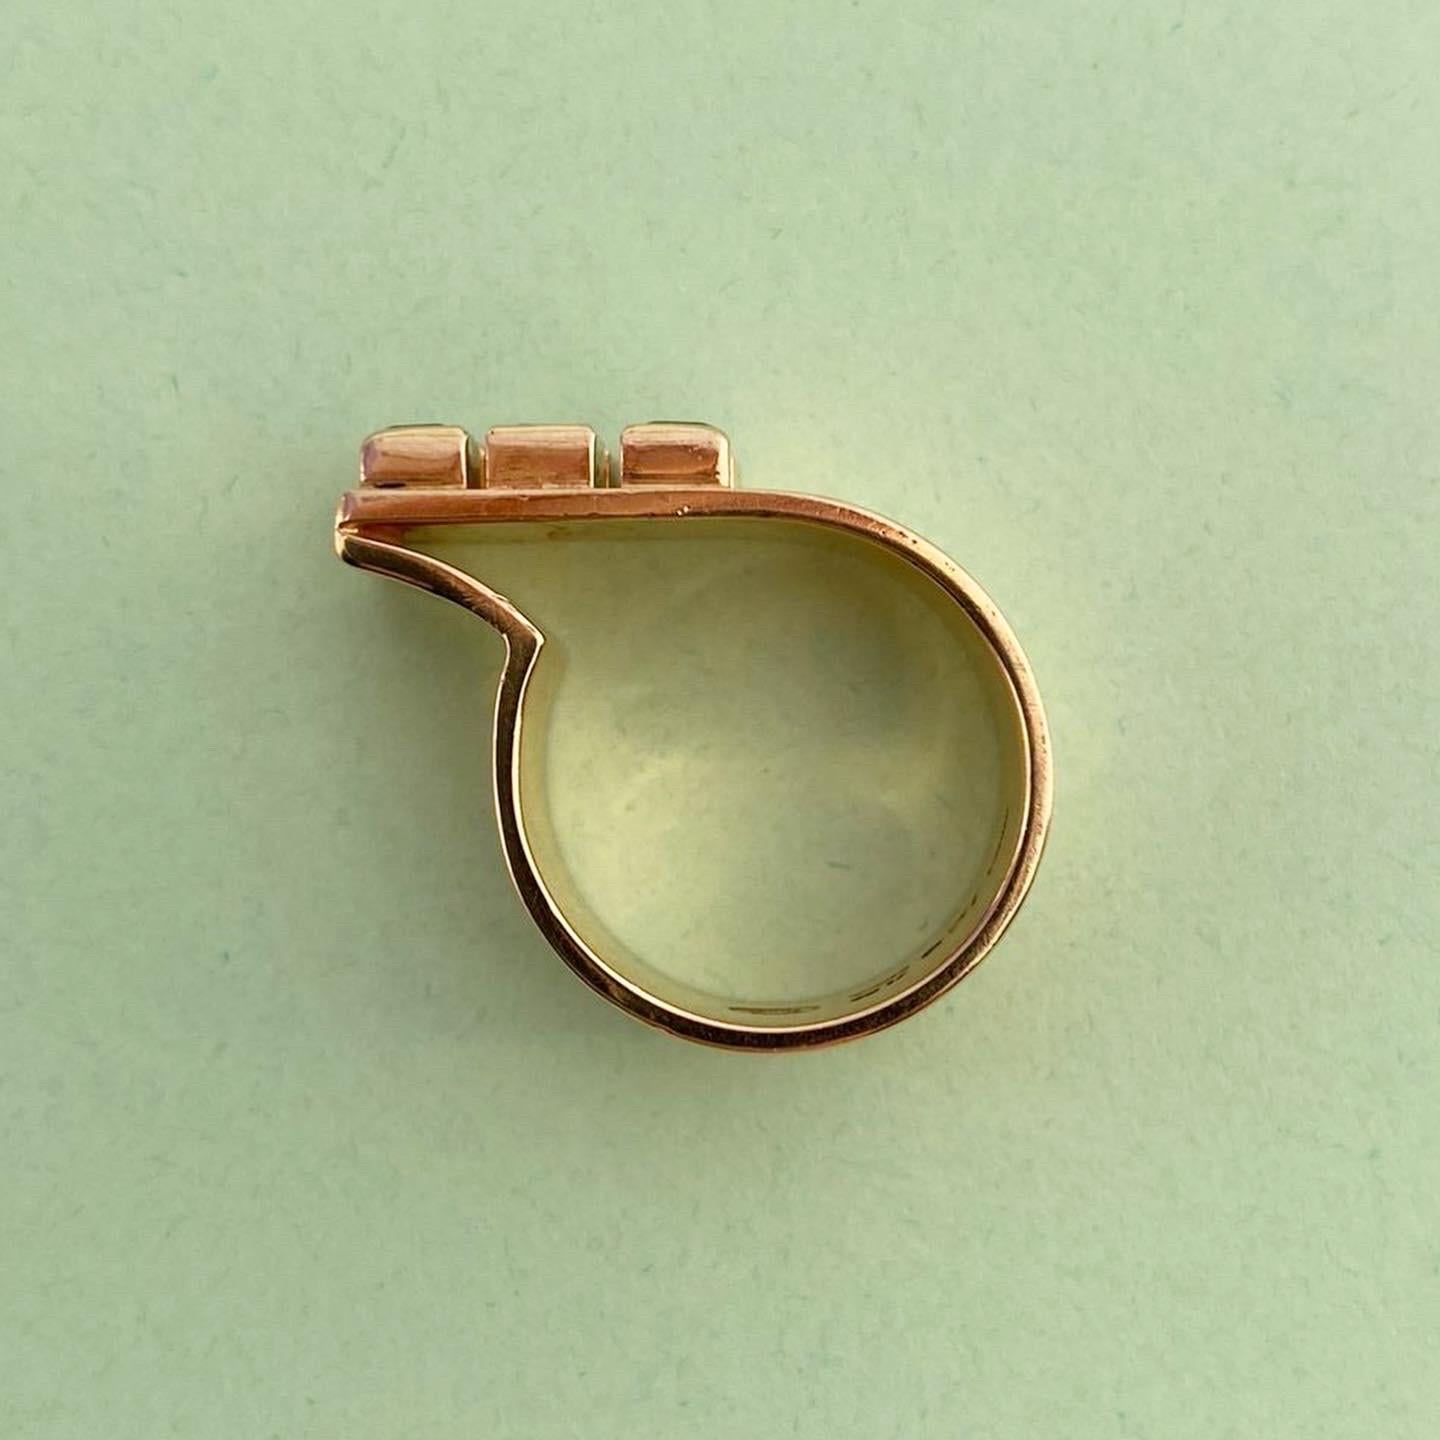 Vintage Georg Jensen 18 carat gold ring set with six tourmaline cubes, circa 1970

weight: 10.44 grams
ring size: 16.25 mm / 5 3/4 US